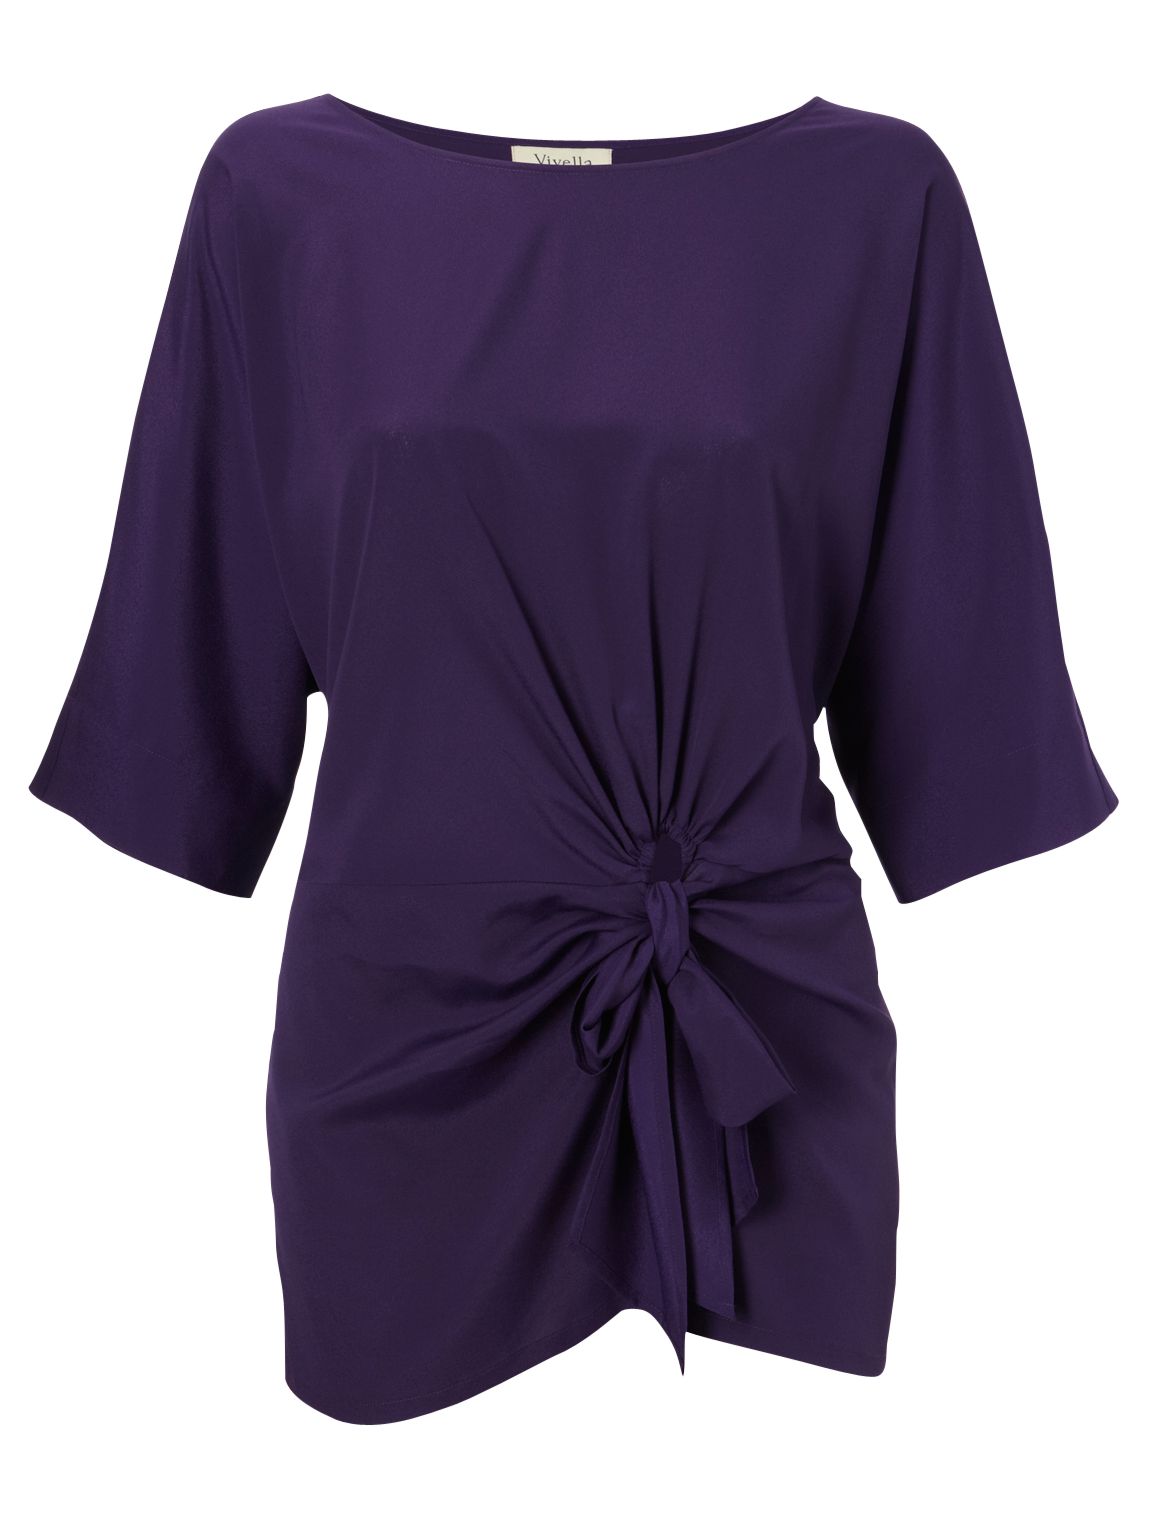 Viyella Tie Front Blouse, Purple